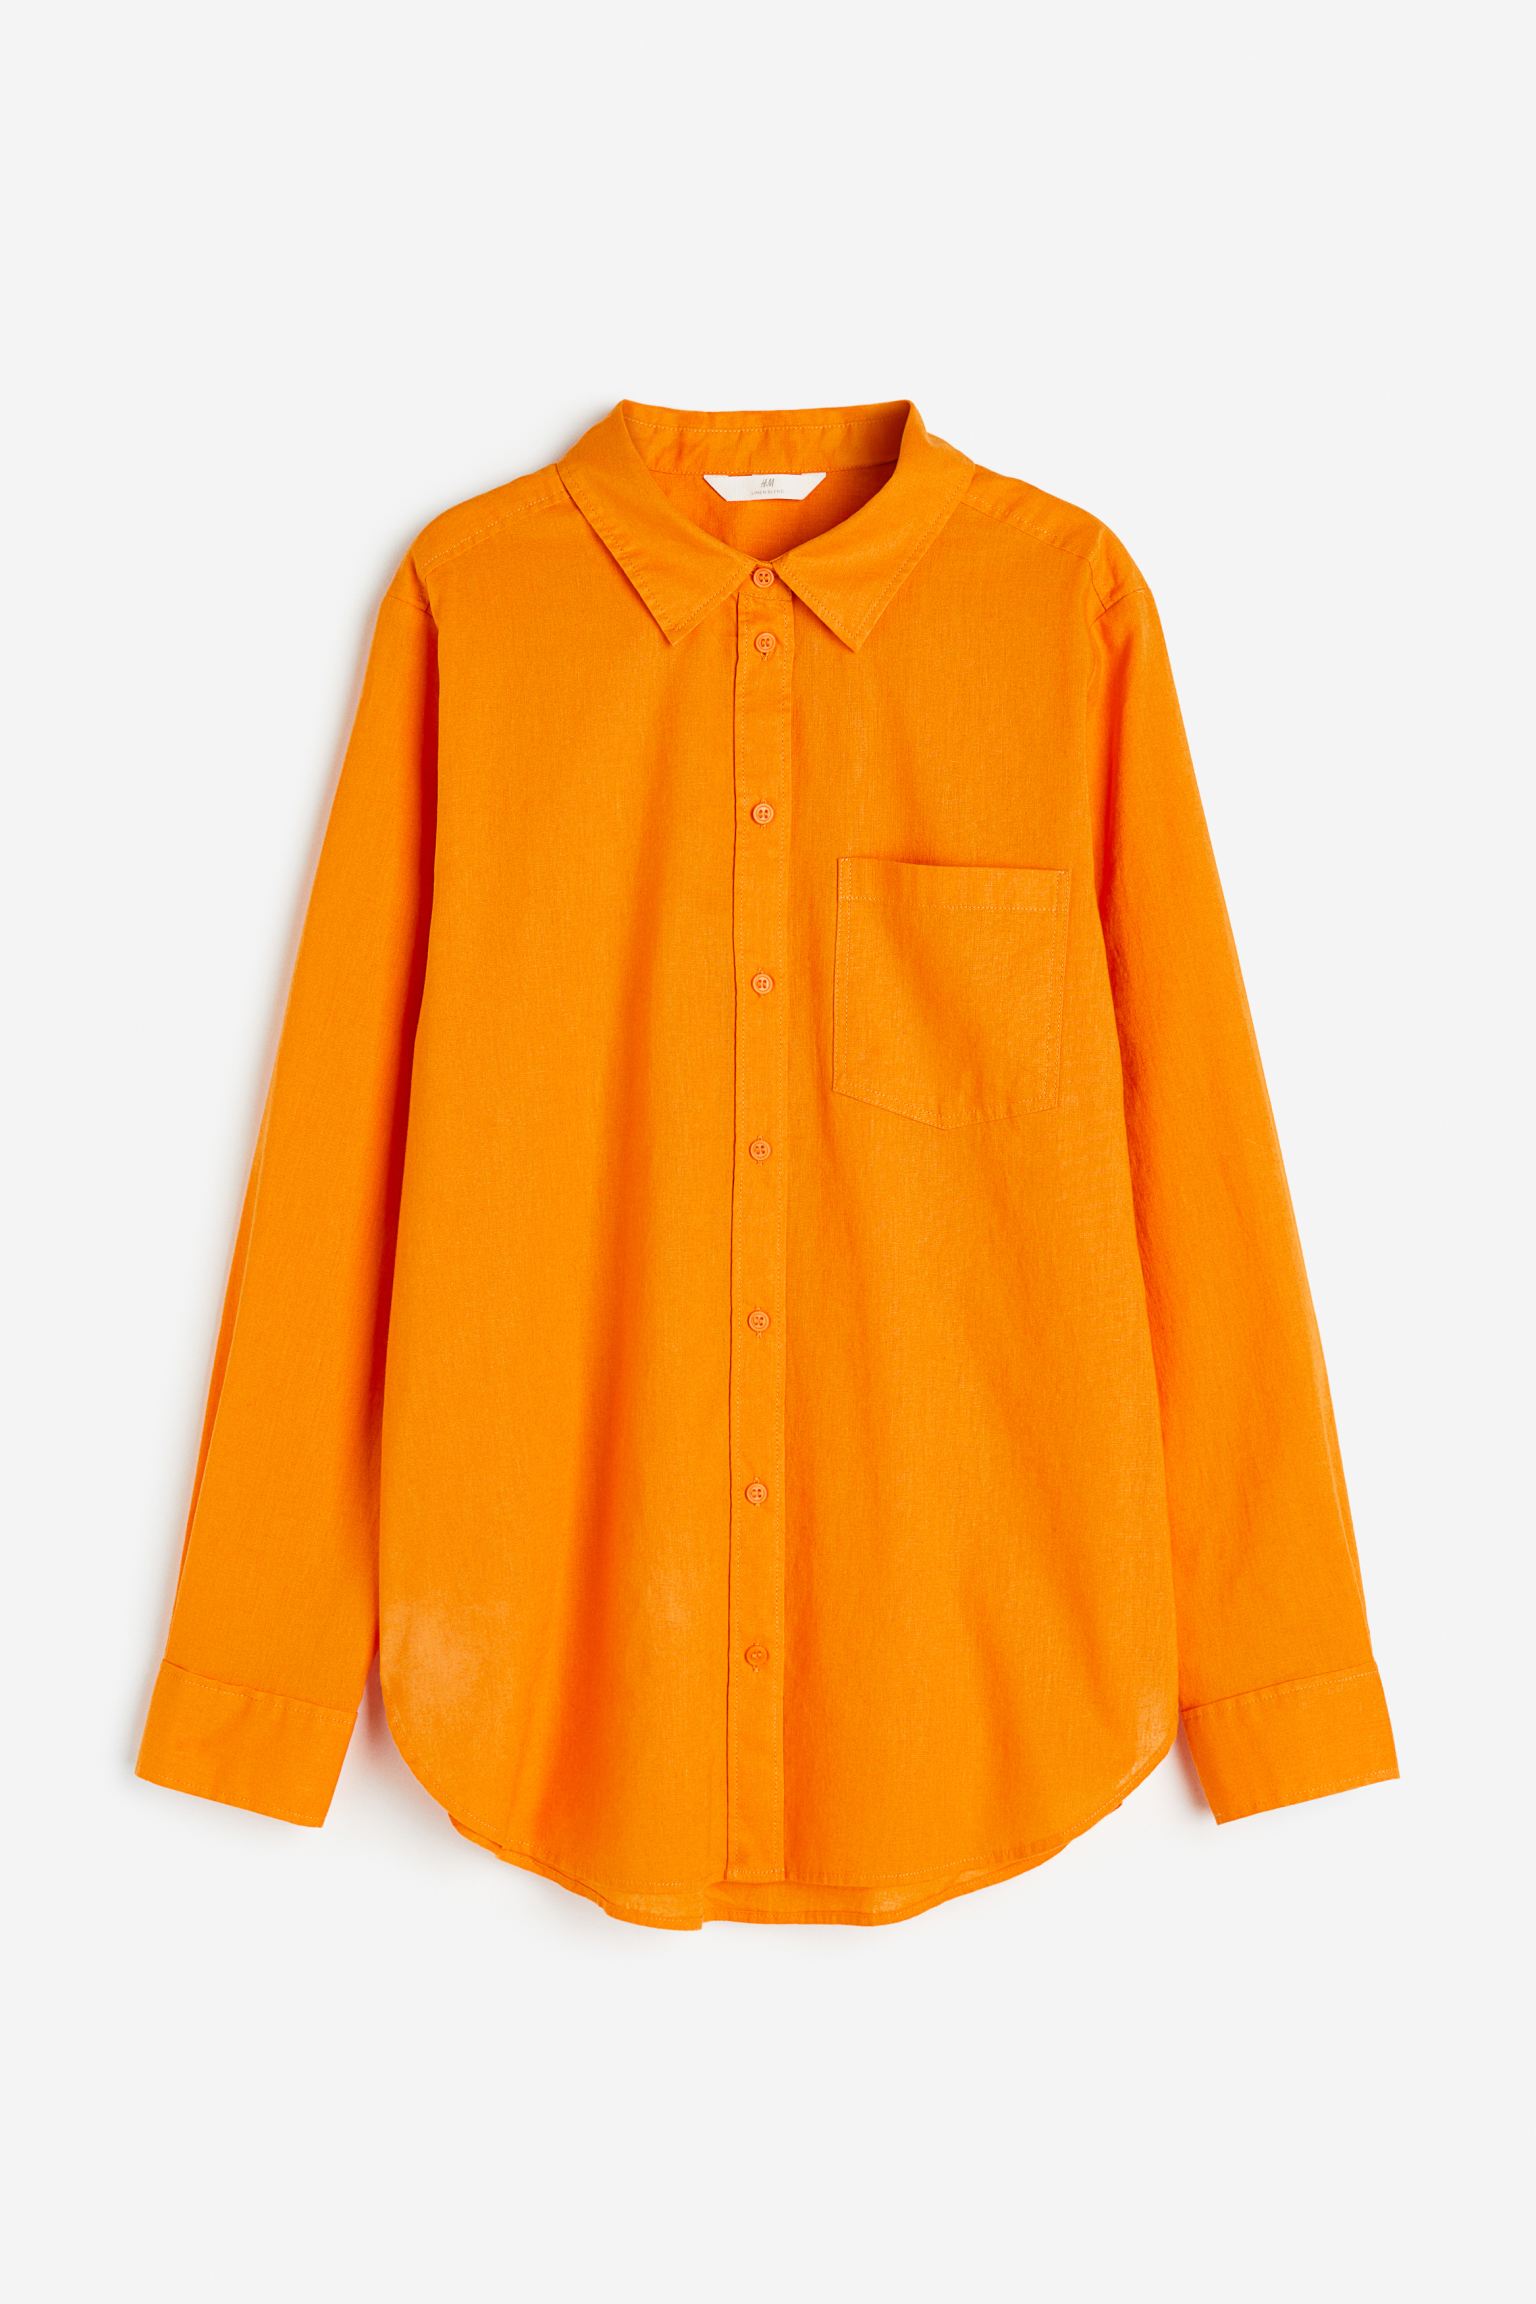 Рубашка женская H&M 1027844023 оранжевая S (доставка из-за рубежа)